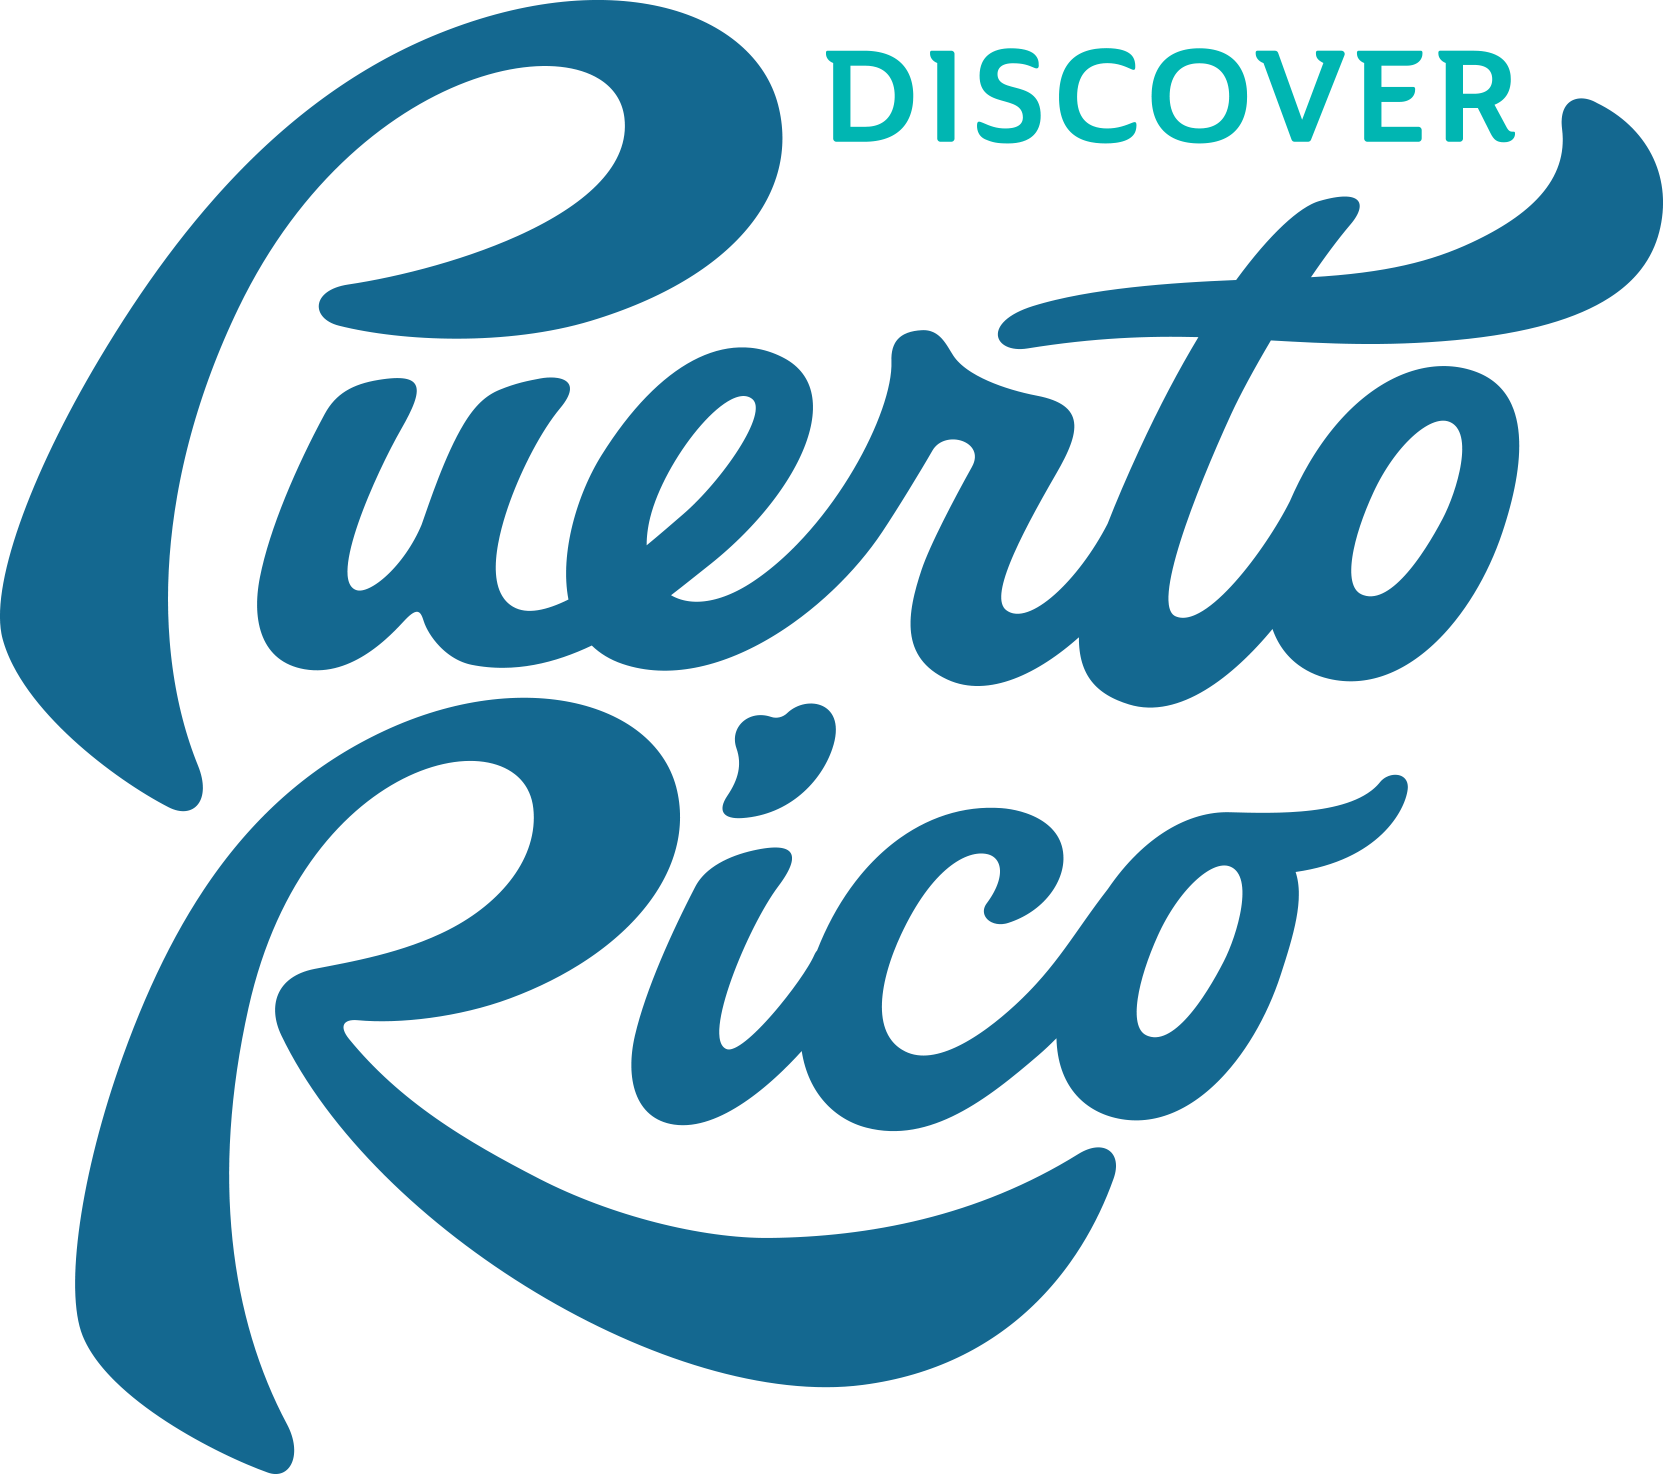 La Perla  Discover Puerto Rico